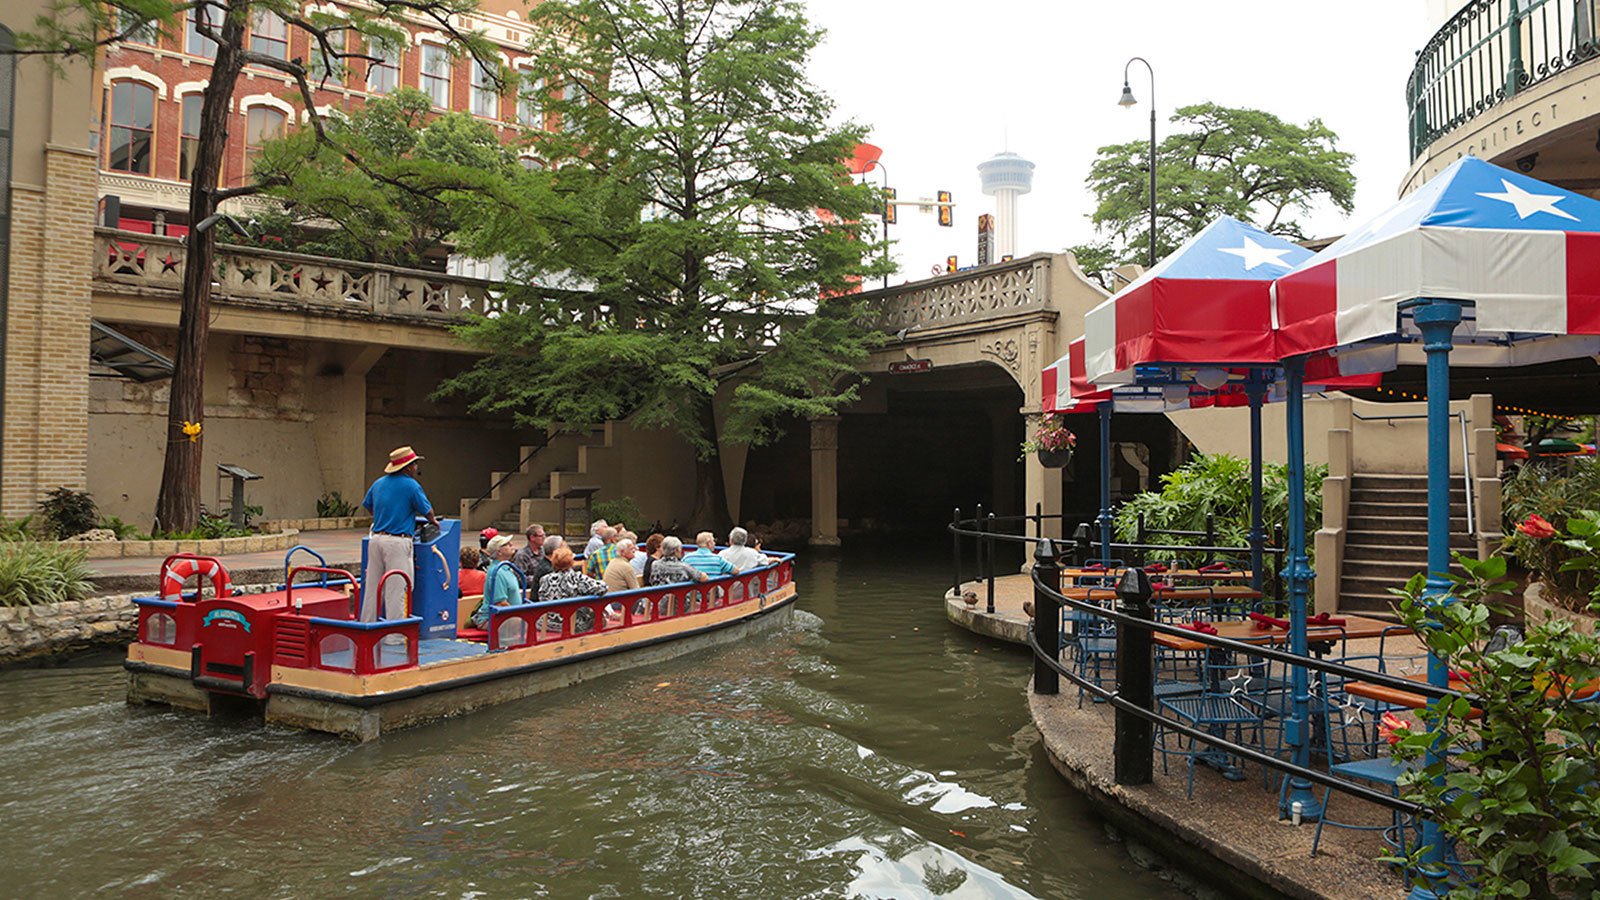 San Antonio Riverwalk - PEOPLE & PLACES: Local Tourist Attraction